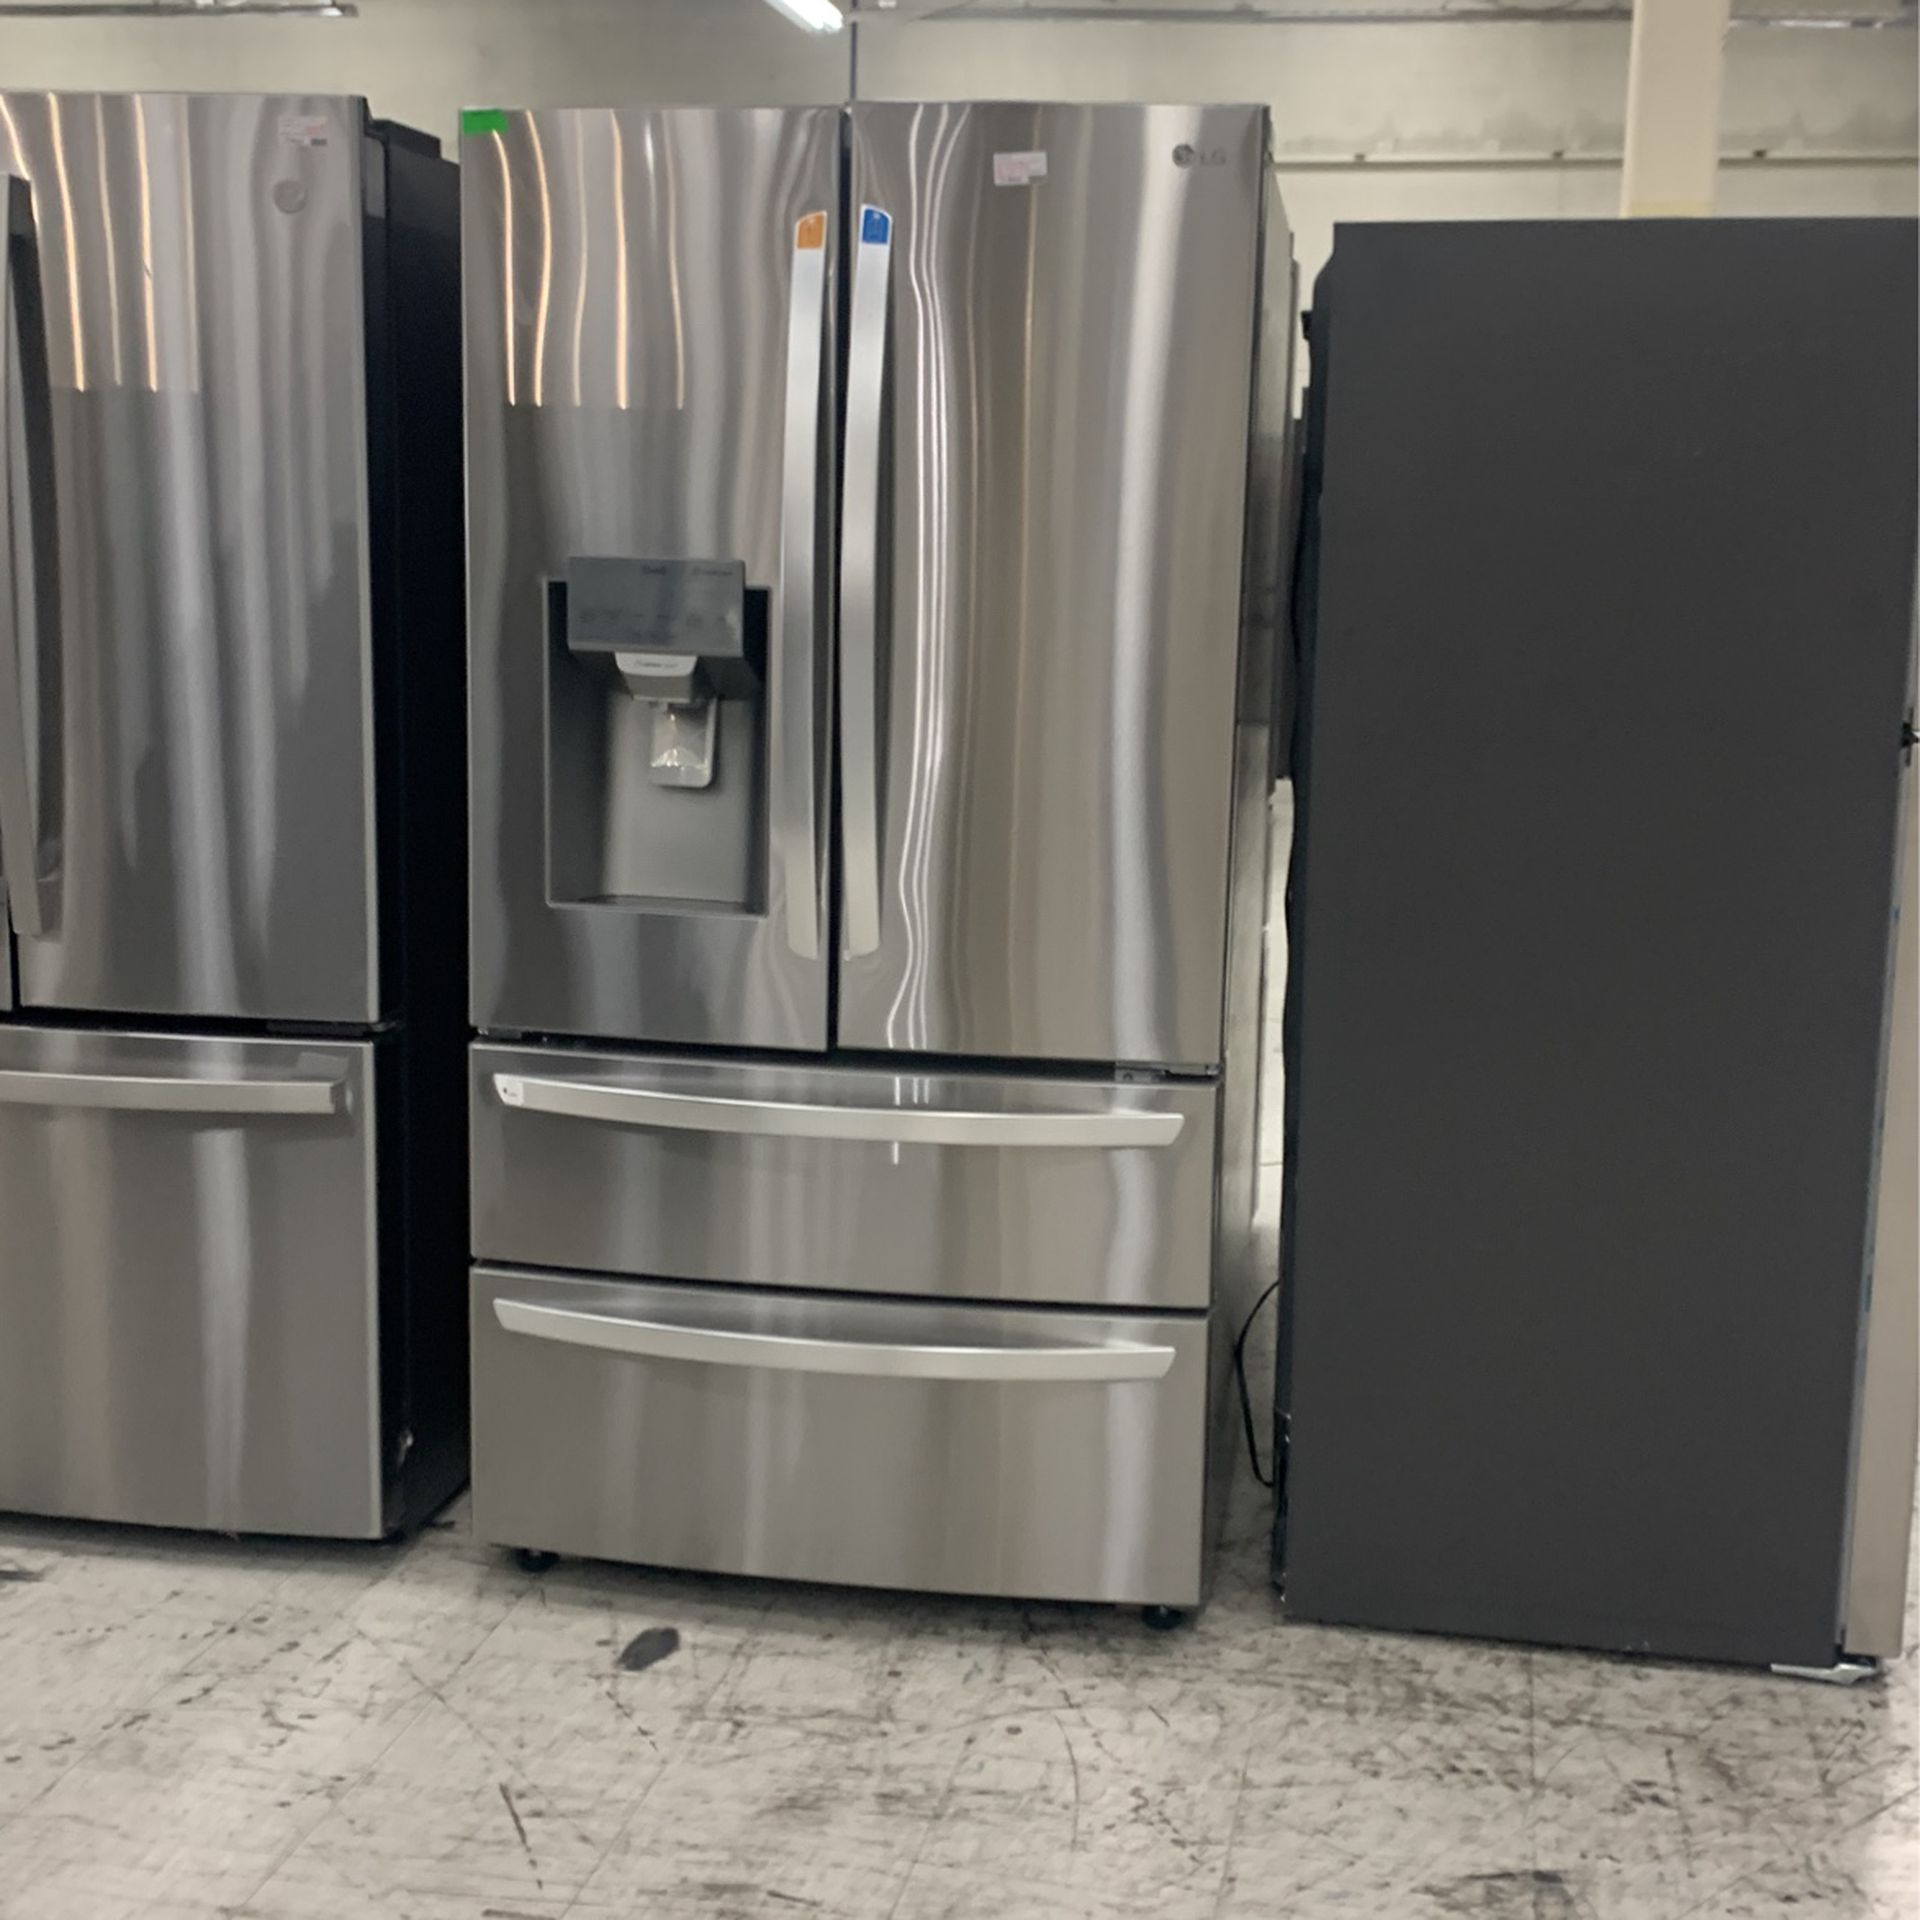 LG Double Freezer Refrigerator 